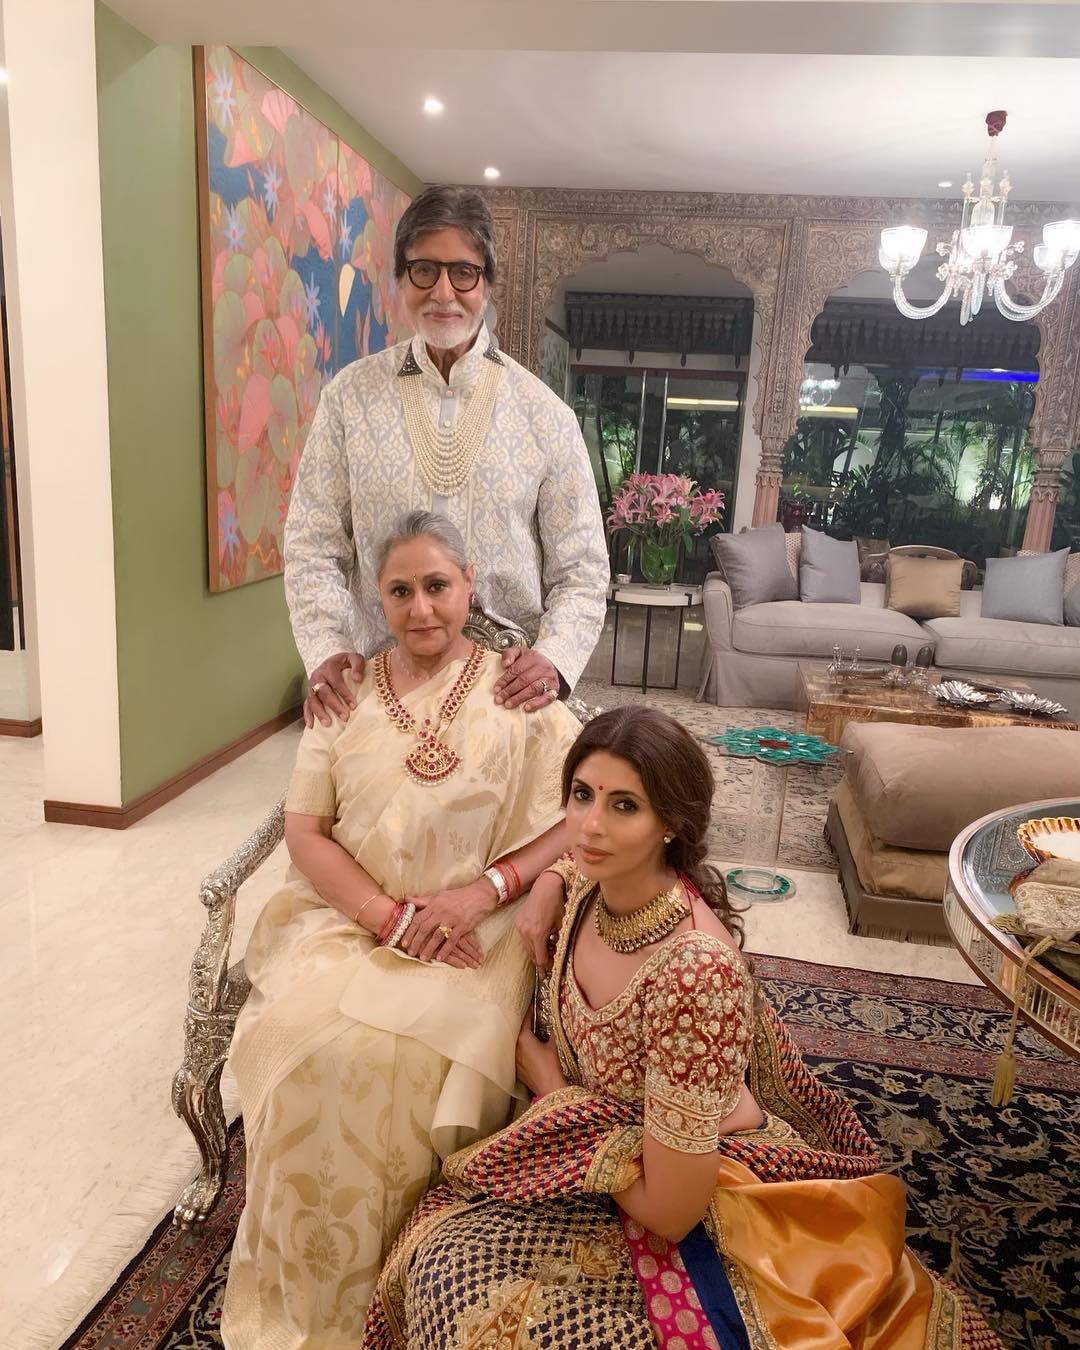 A glimpse of Amitabh Bachchan's home Jalsa.